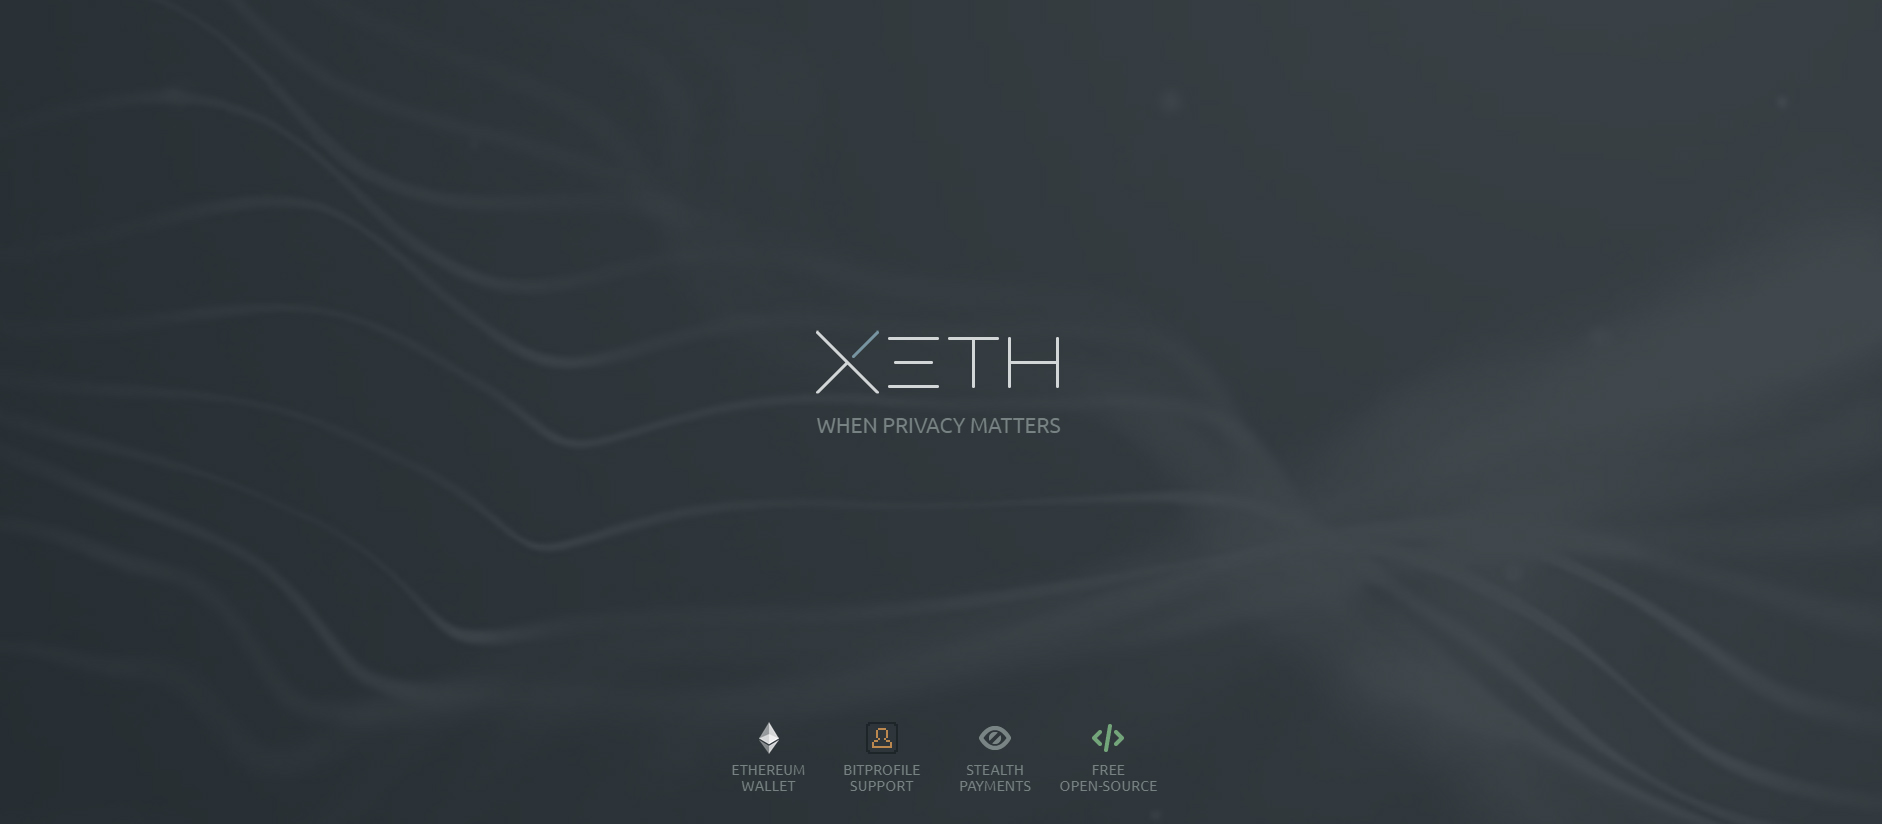 XETH - معرفی کیف پول دسکتاپ XETH